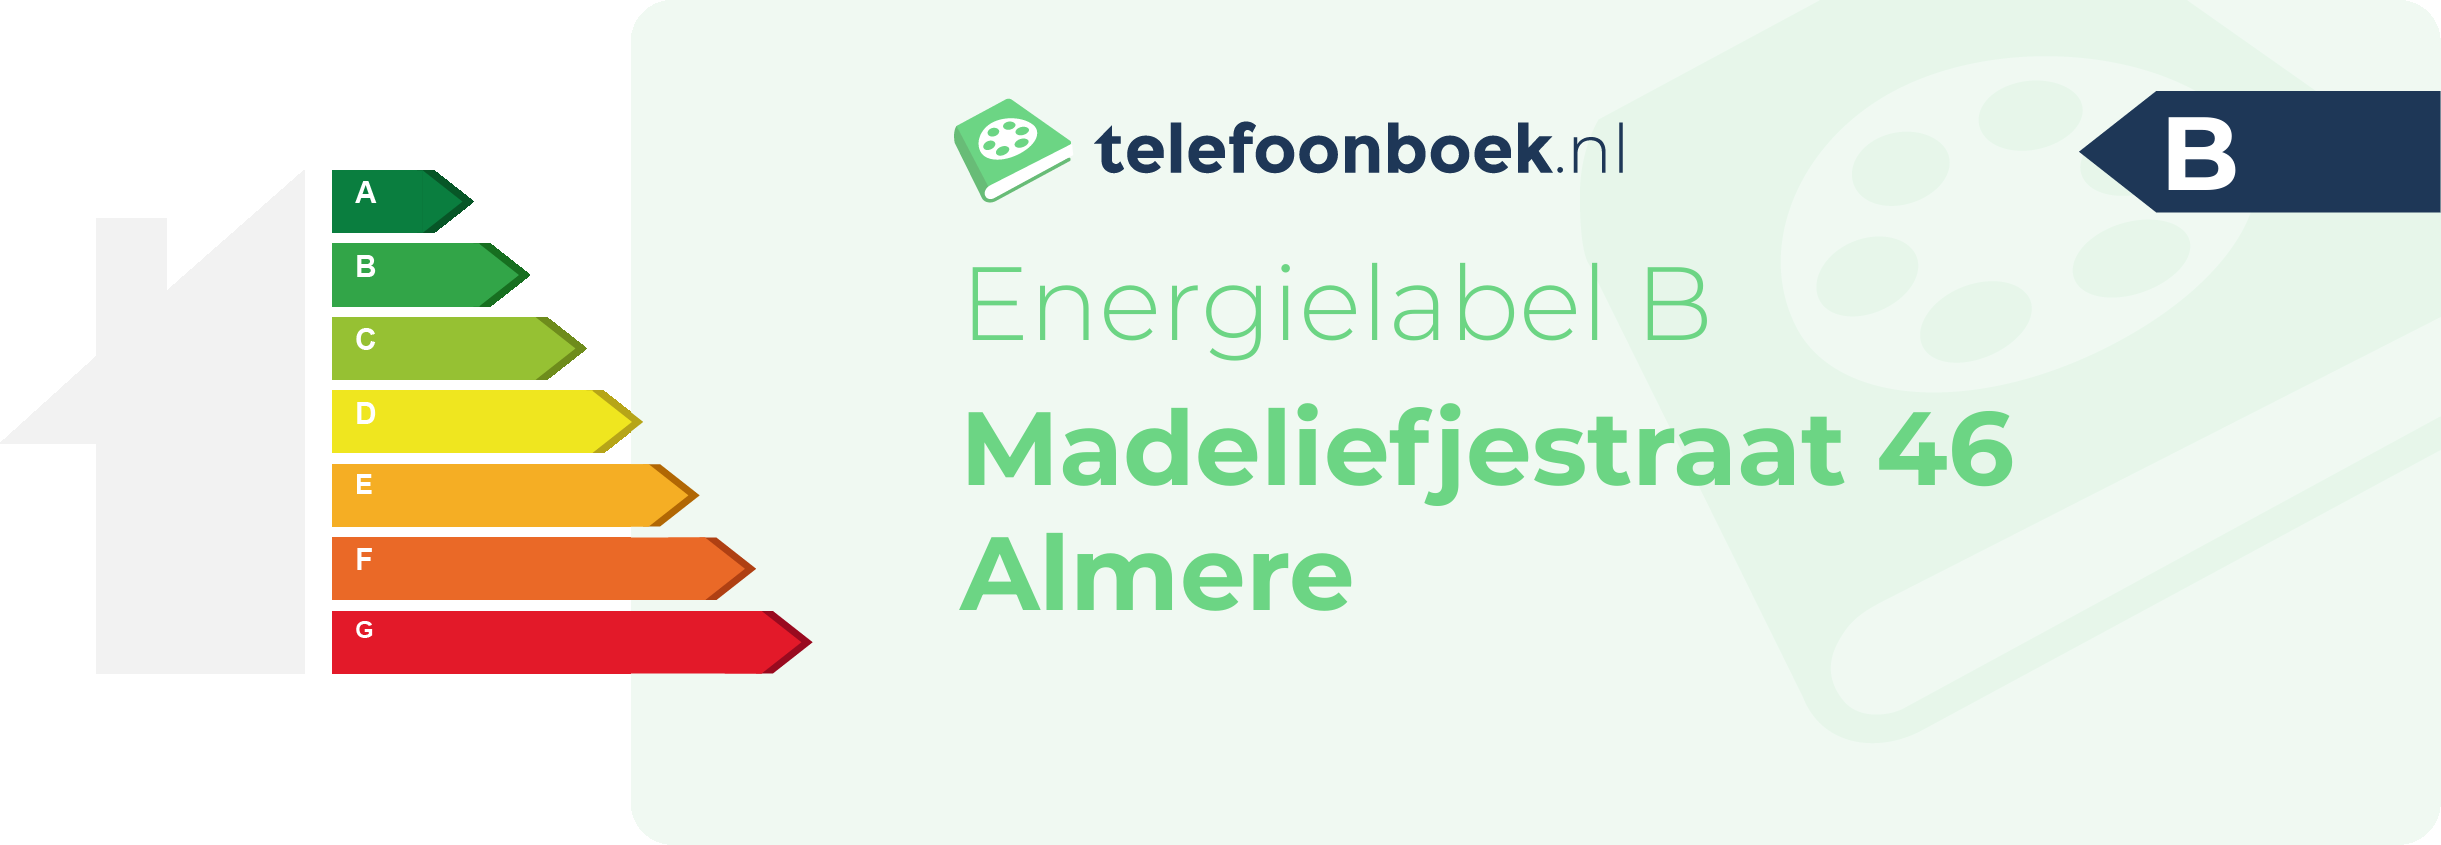 Energielabel Madeliefjestraat 46 Almere